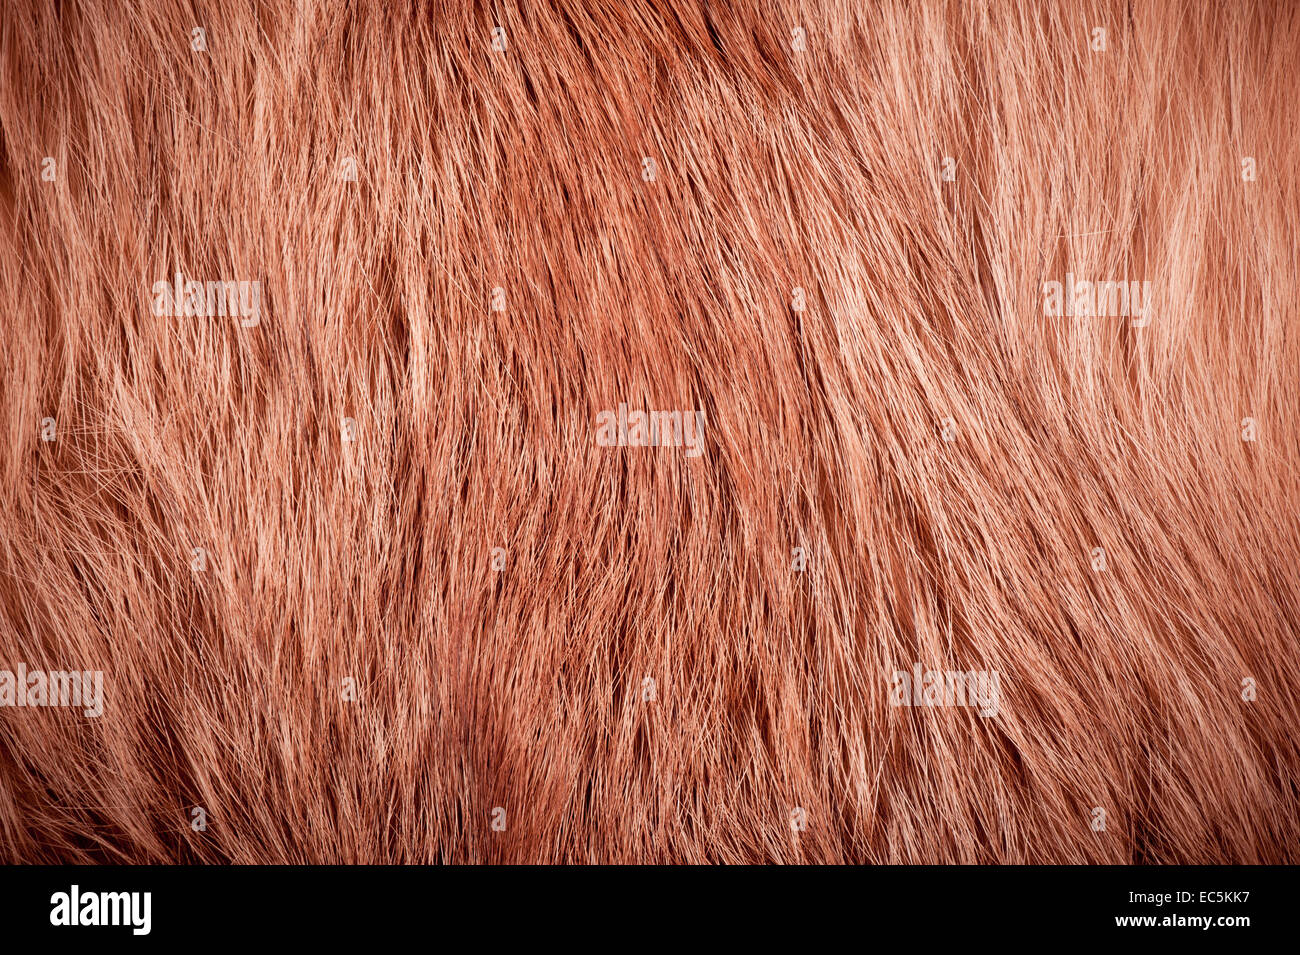 Red Fox fourrure cheveux tissu texture Banque D'Images